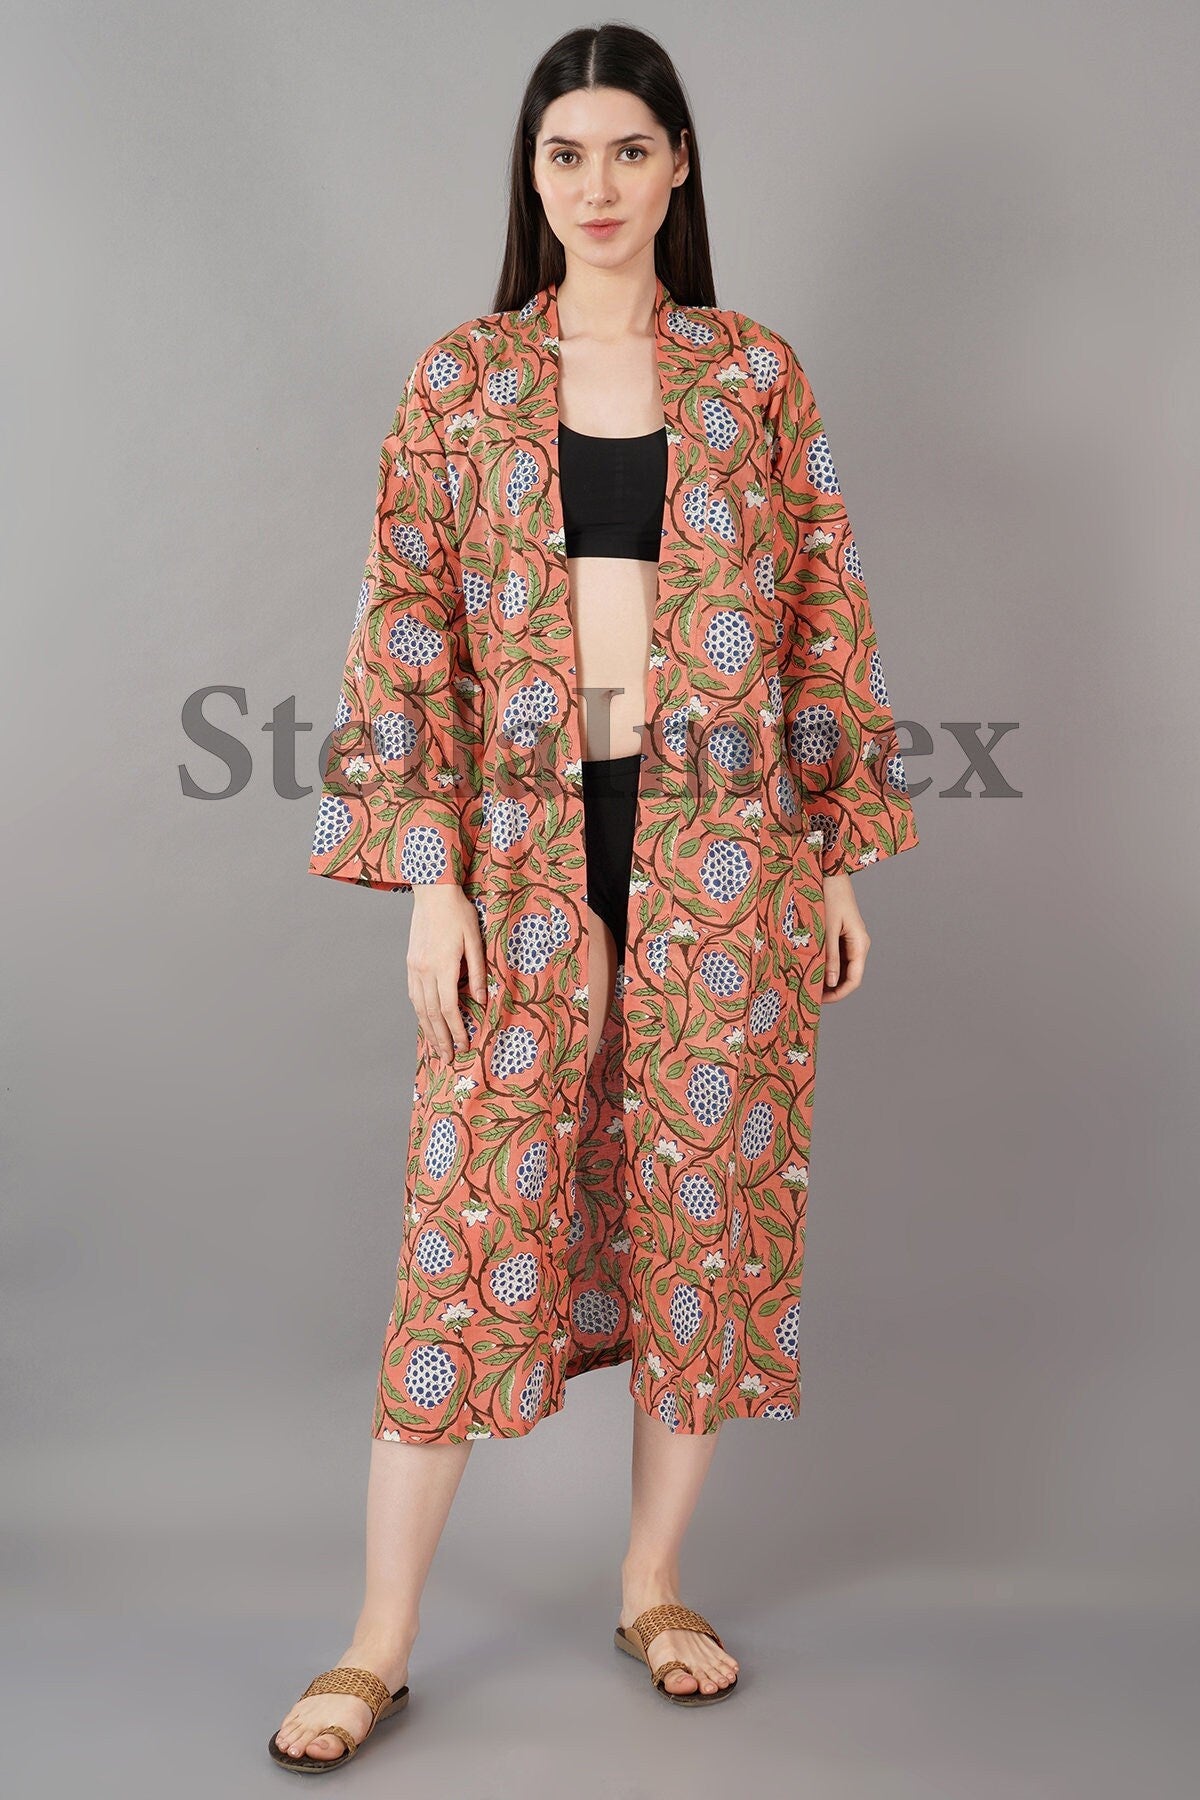 Peach & Blue Hand Block Print Elegant Cotton Kimono Bathrobe Resort Wear Beach Bikini Cover-ups Boho Kimono Bathrobe, Gift for Her